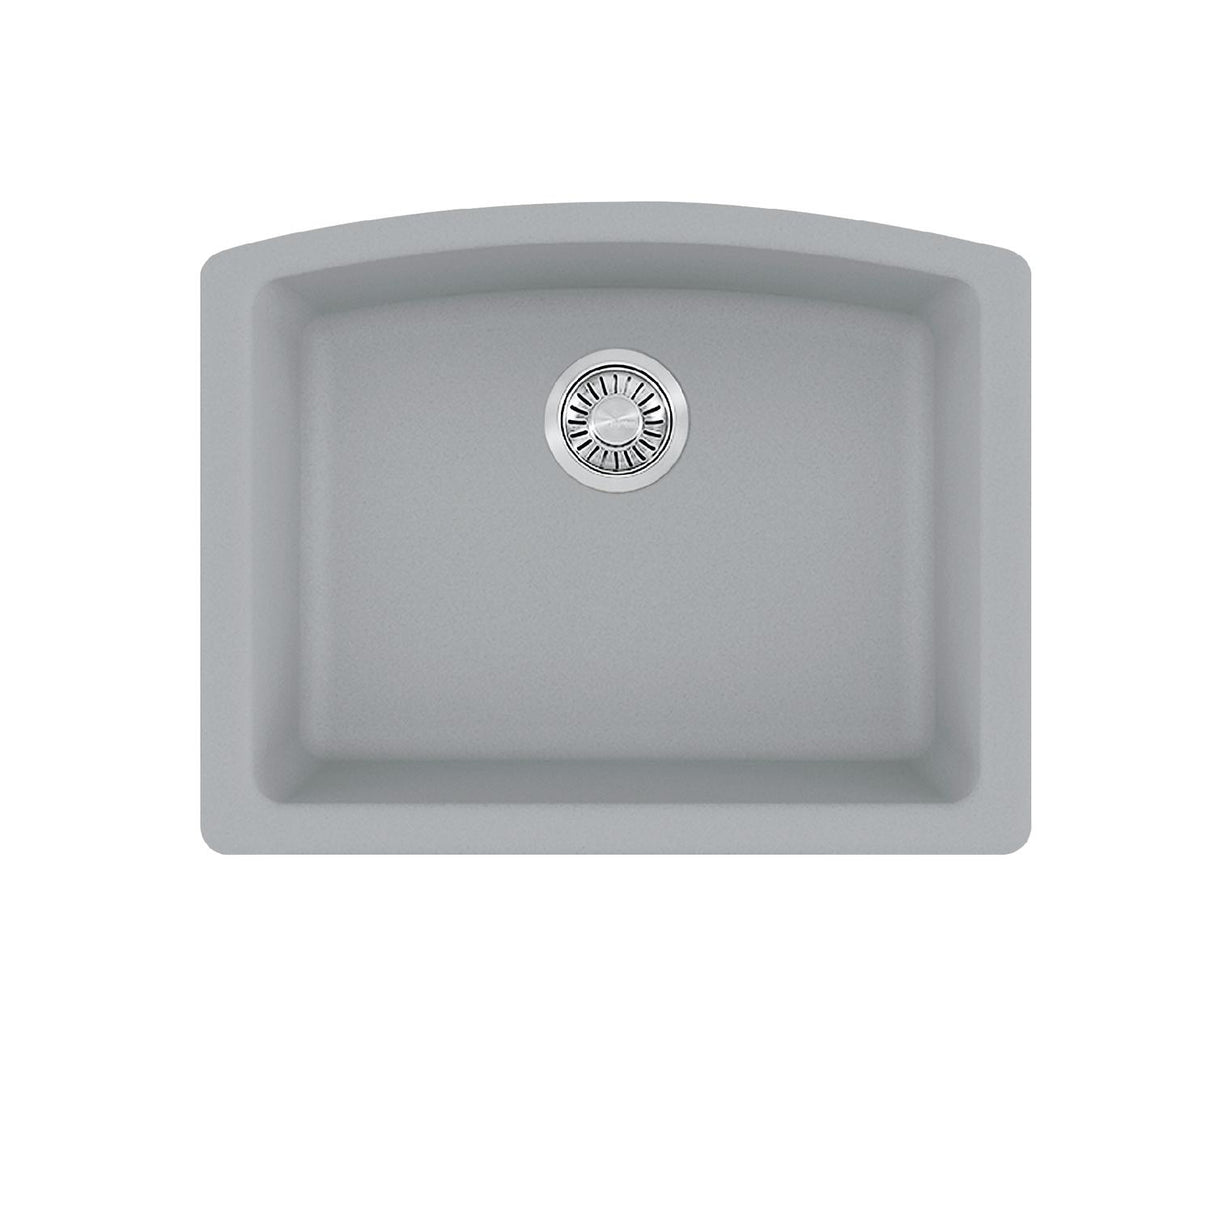 FRANKE ELG11022SHG Ellipse 25.0-in. x 19.6-in. Stone Grey Granite Undermount Single Bowl Kitchen Sink - ELG11022SHG In Stone Grey